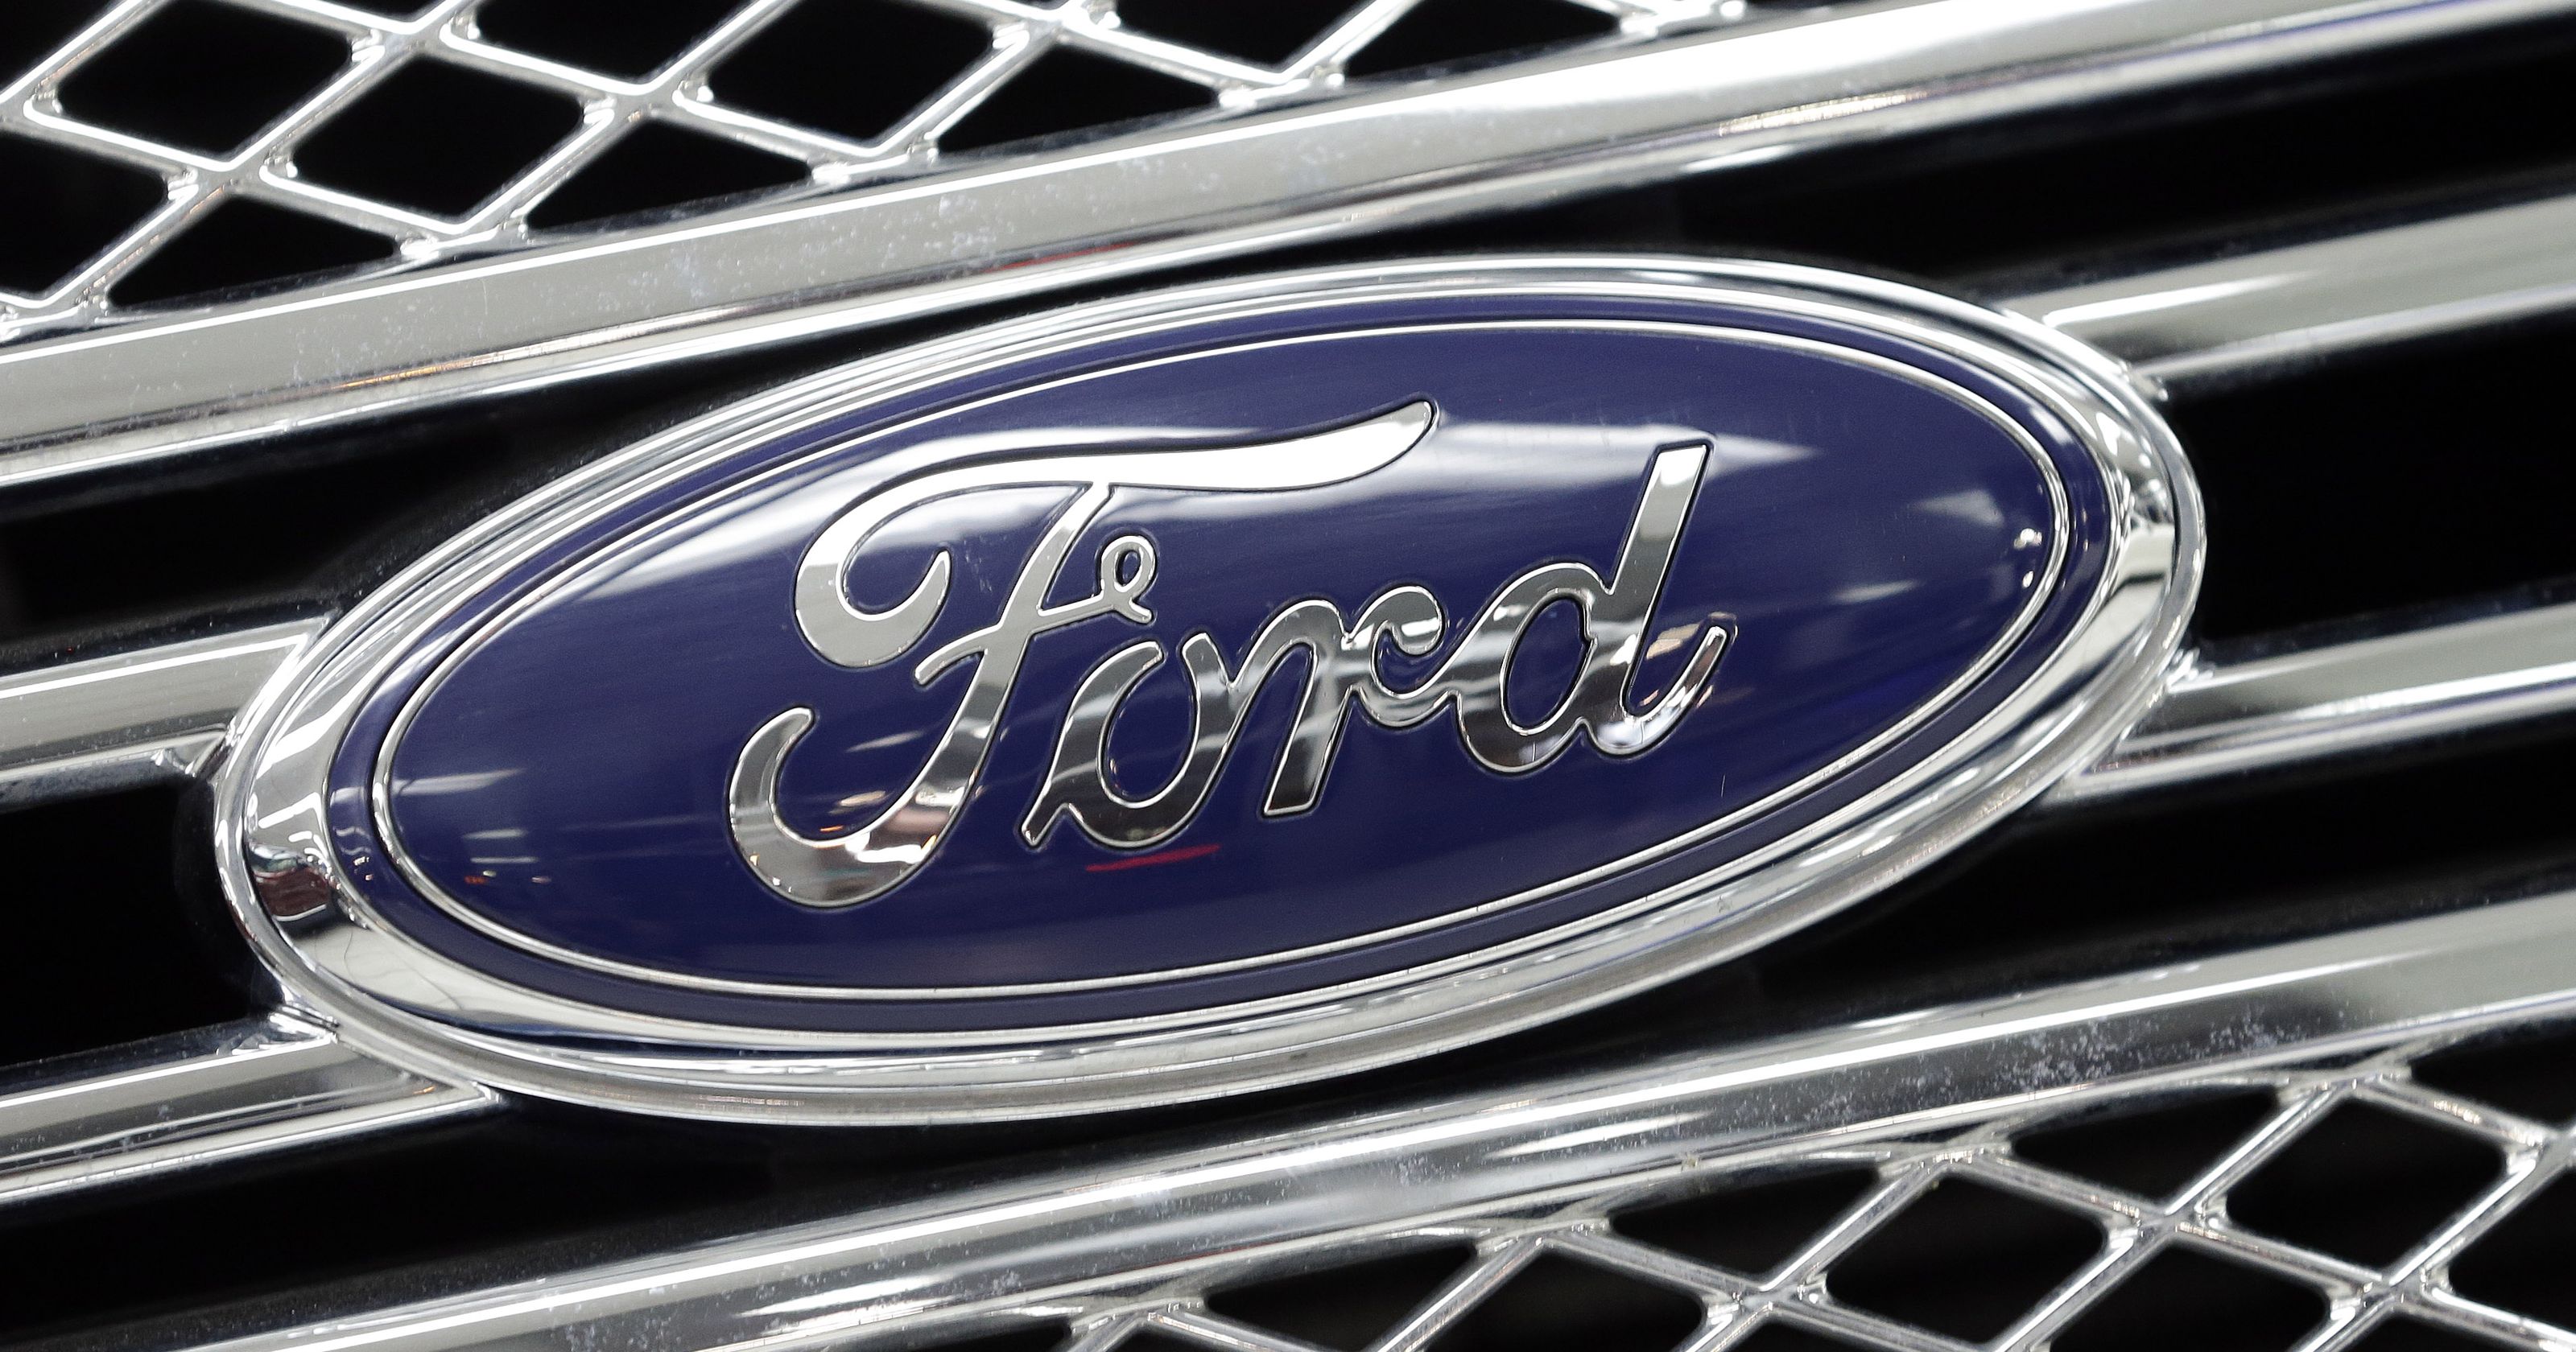 Ford shelves compact car program for emerging markets, setback for India